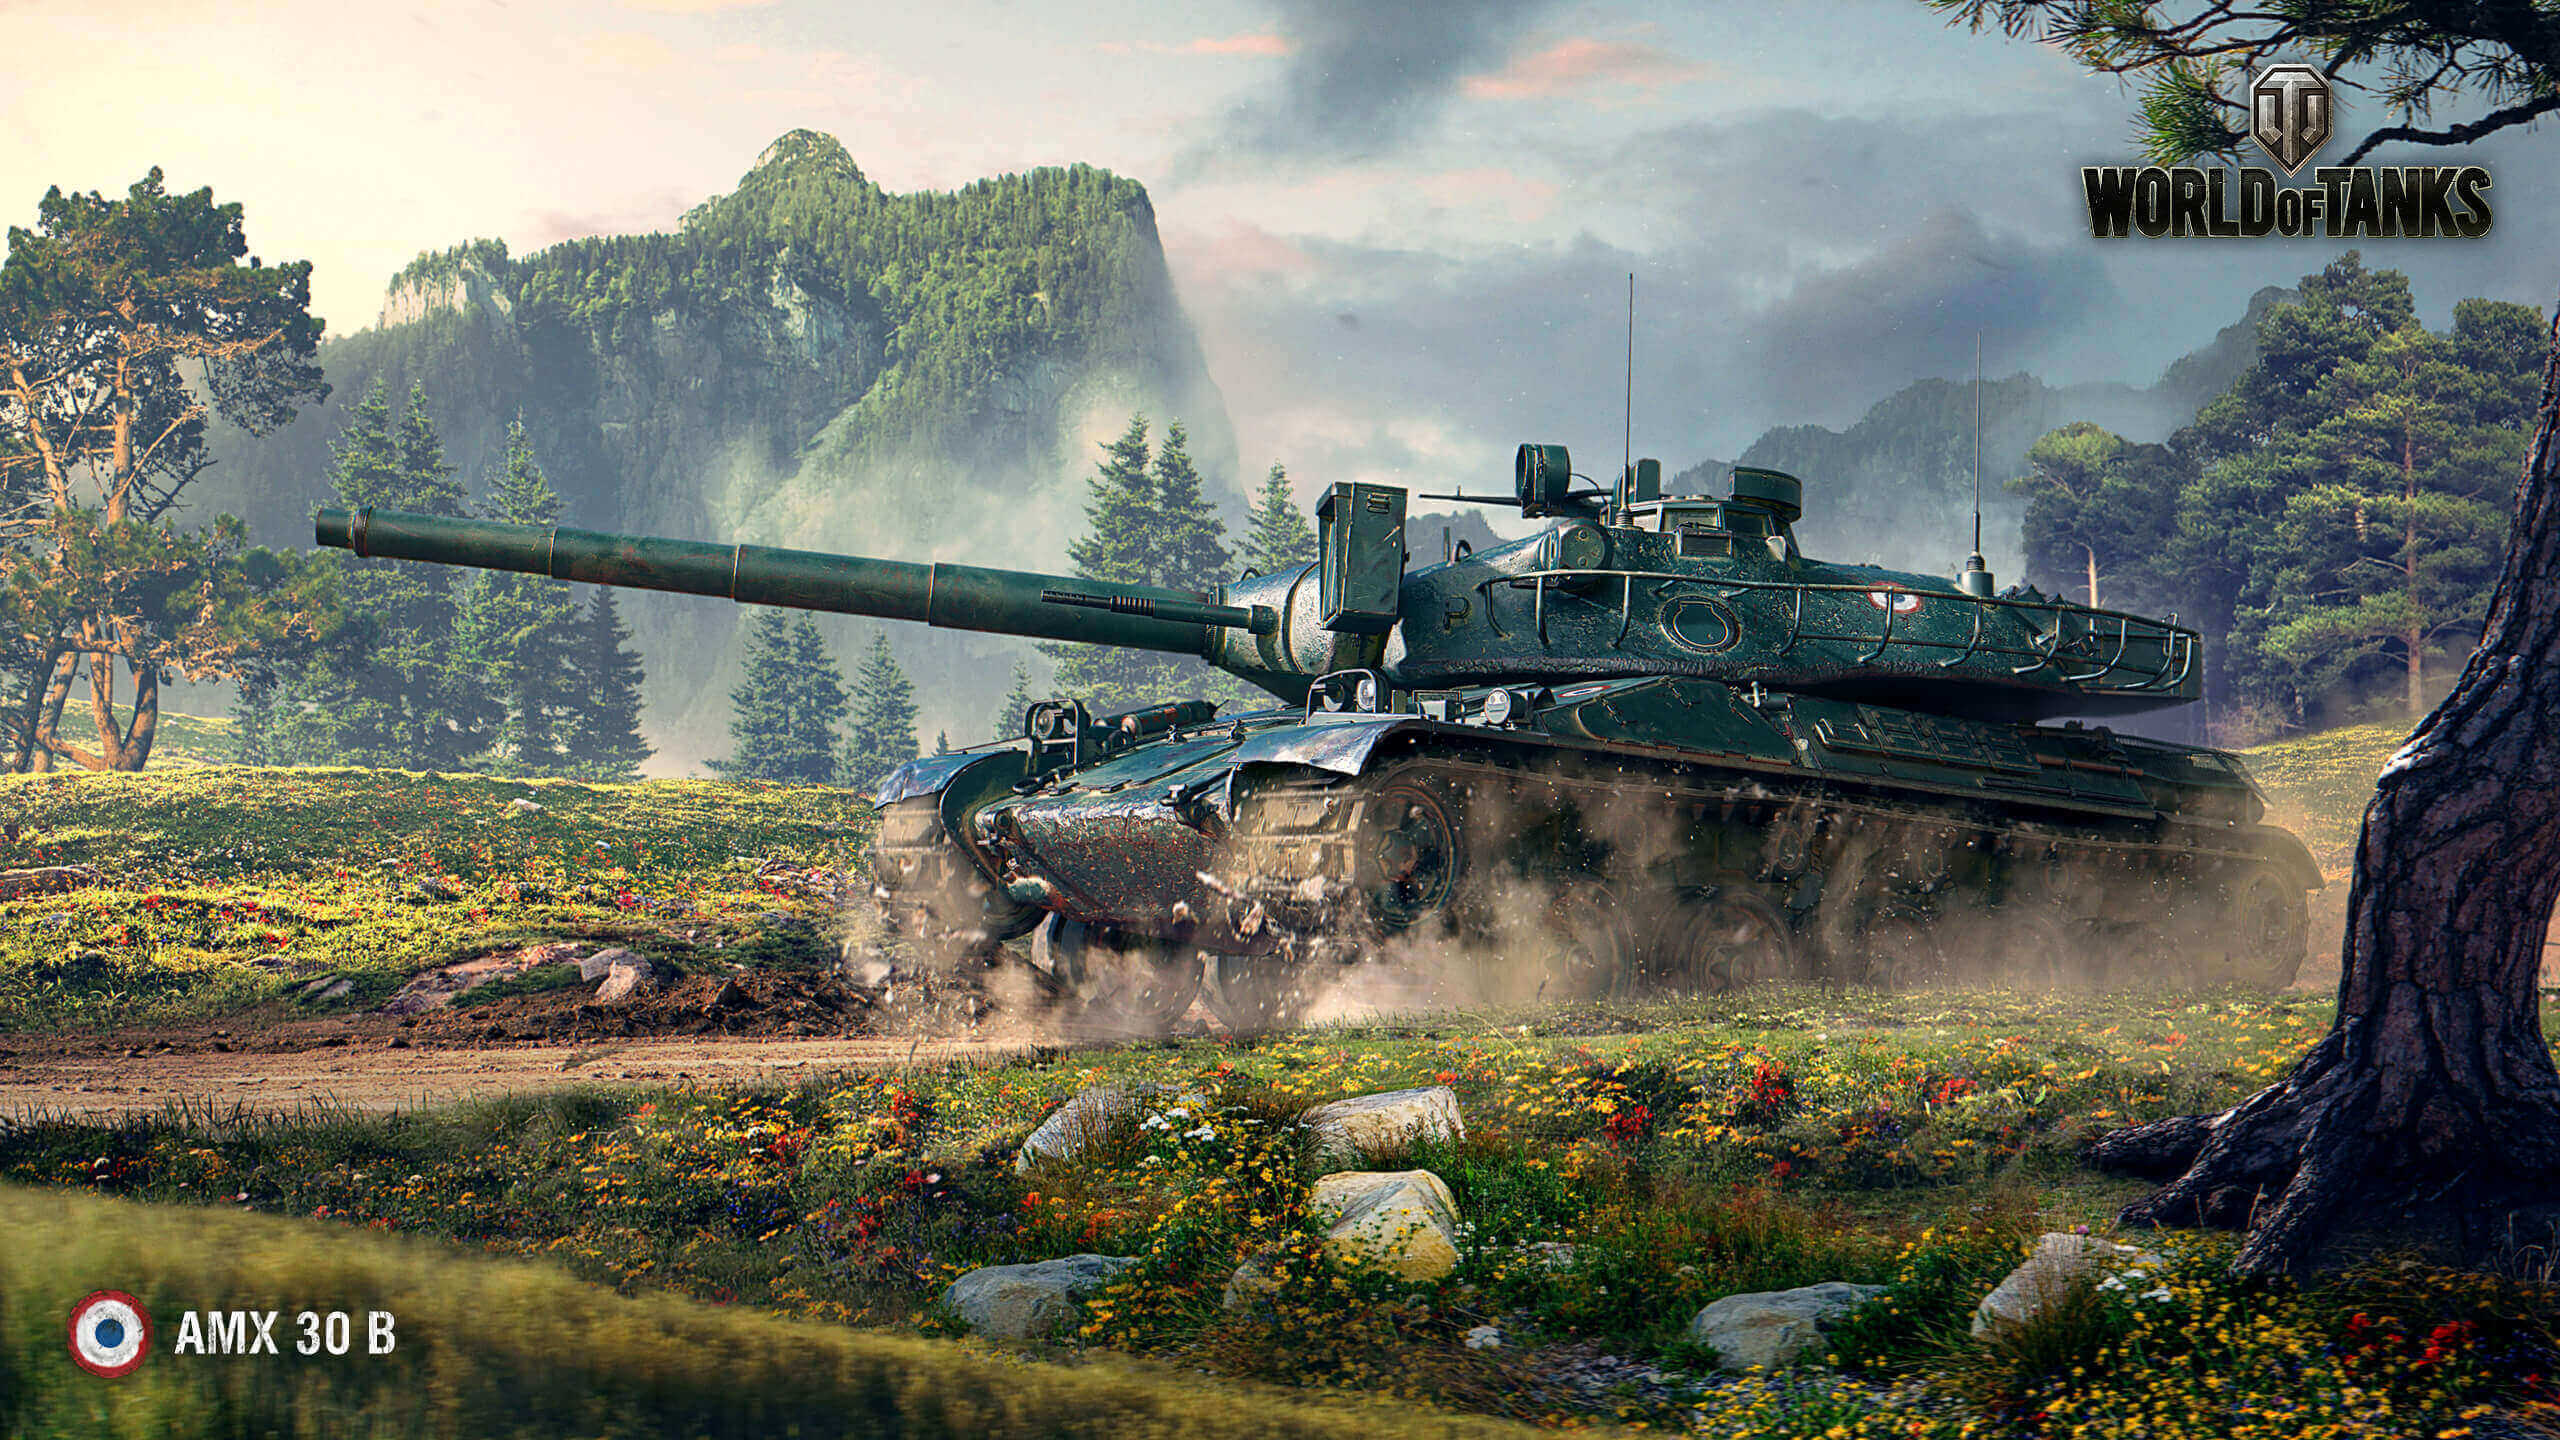 Wallpaper tháng 4/2015: AMX 30 B | Tăng – Media về World of Tanks ...